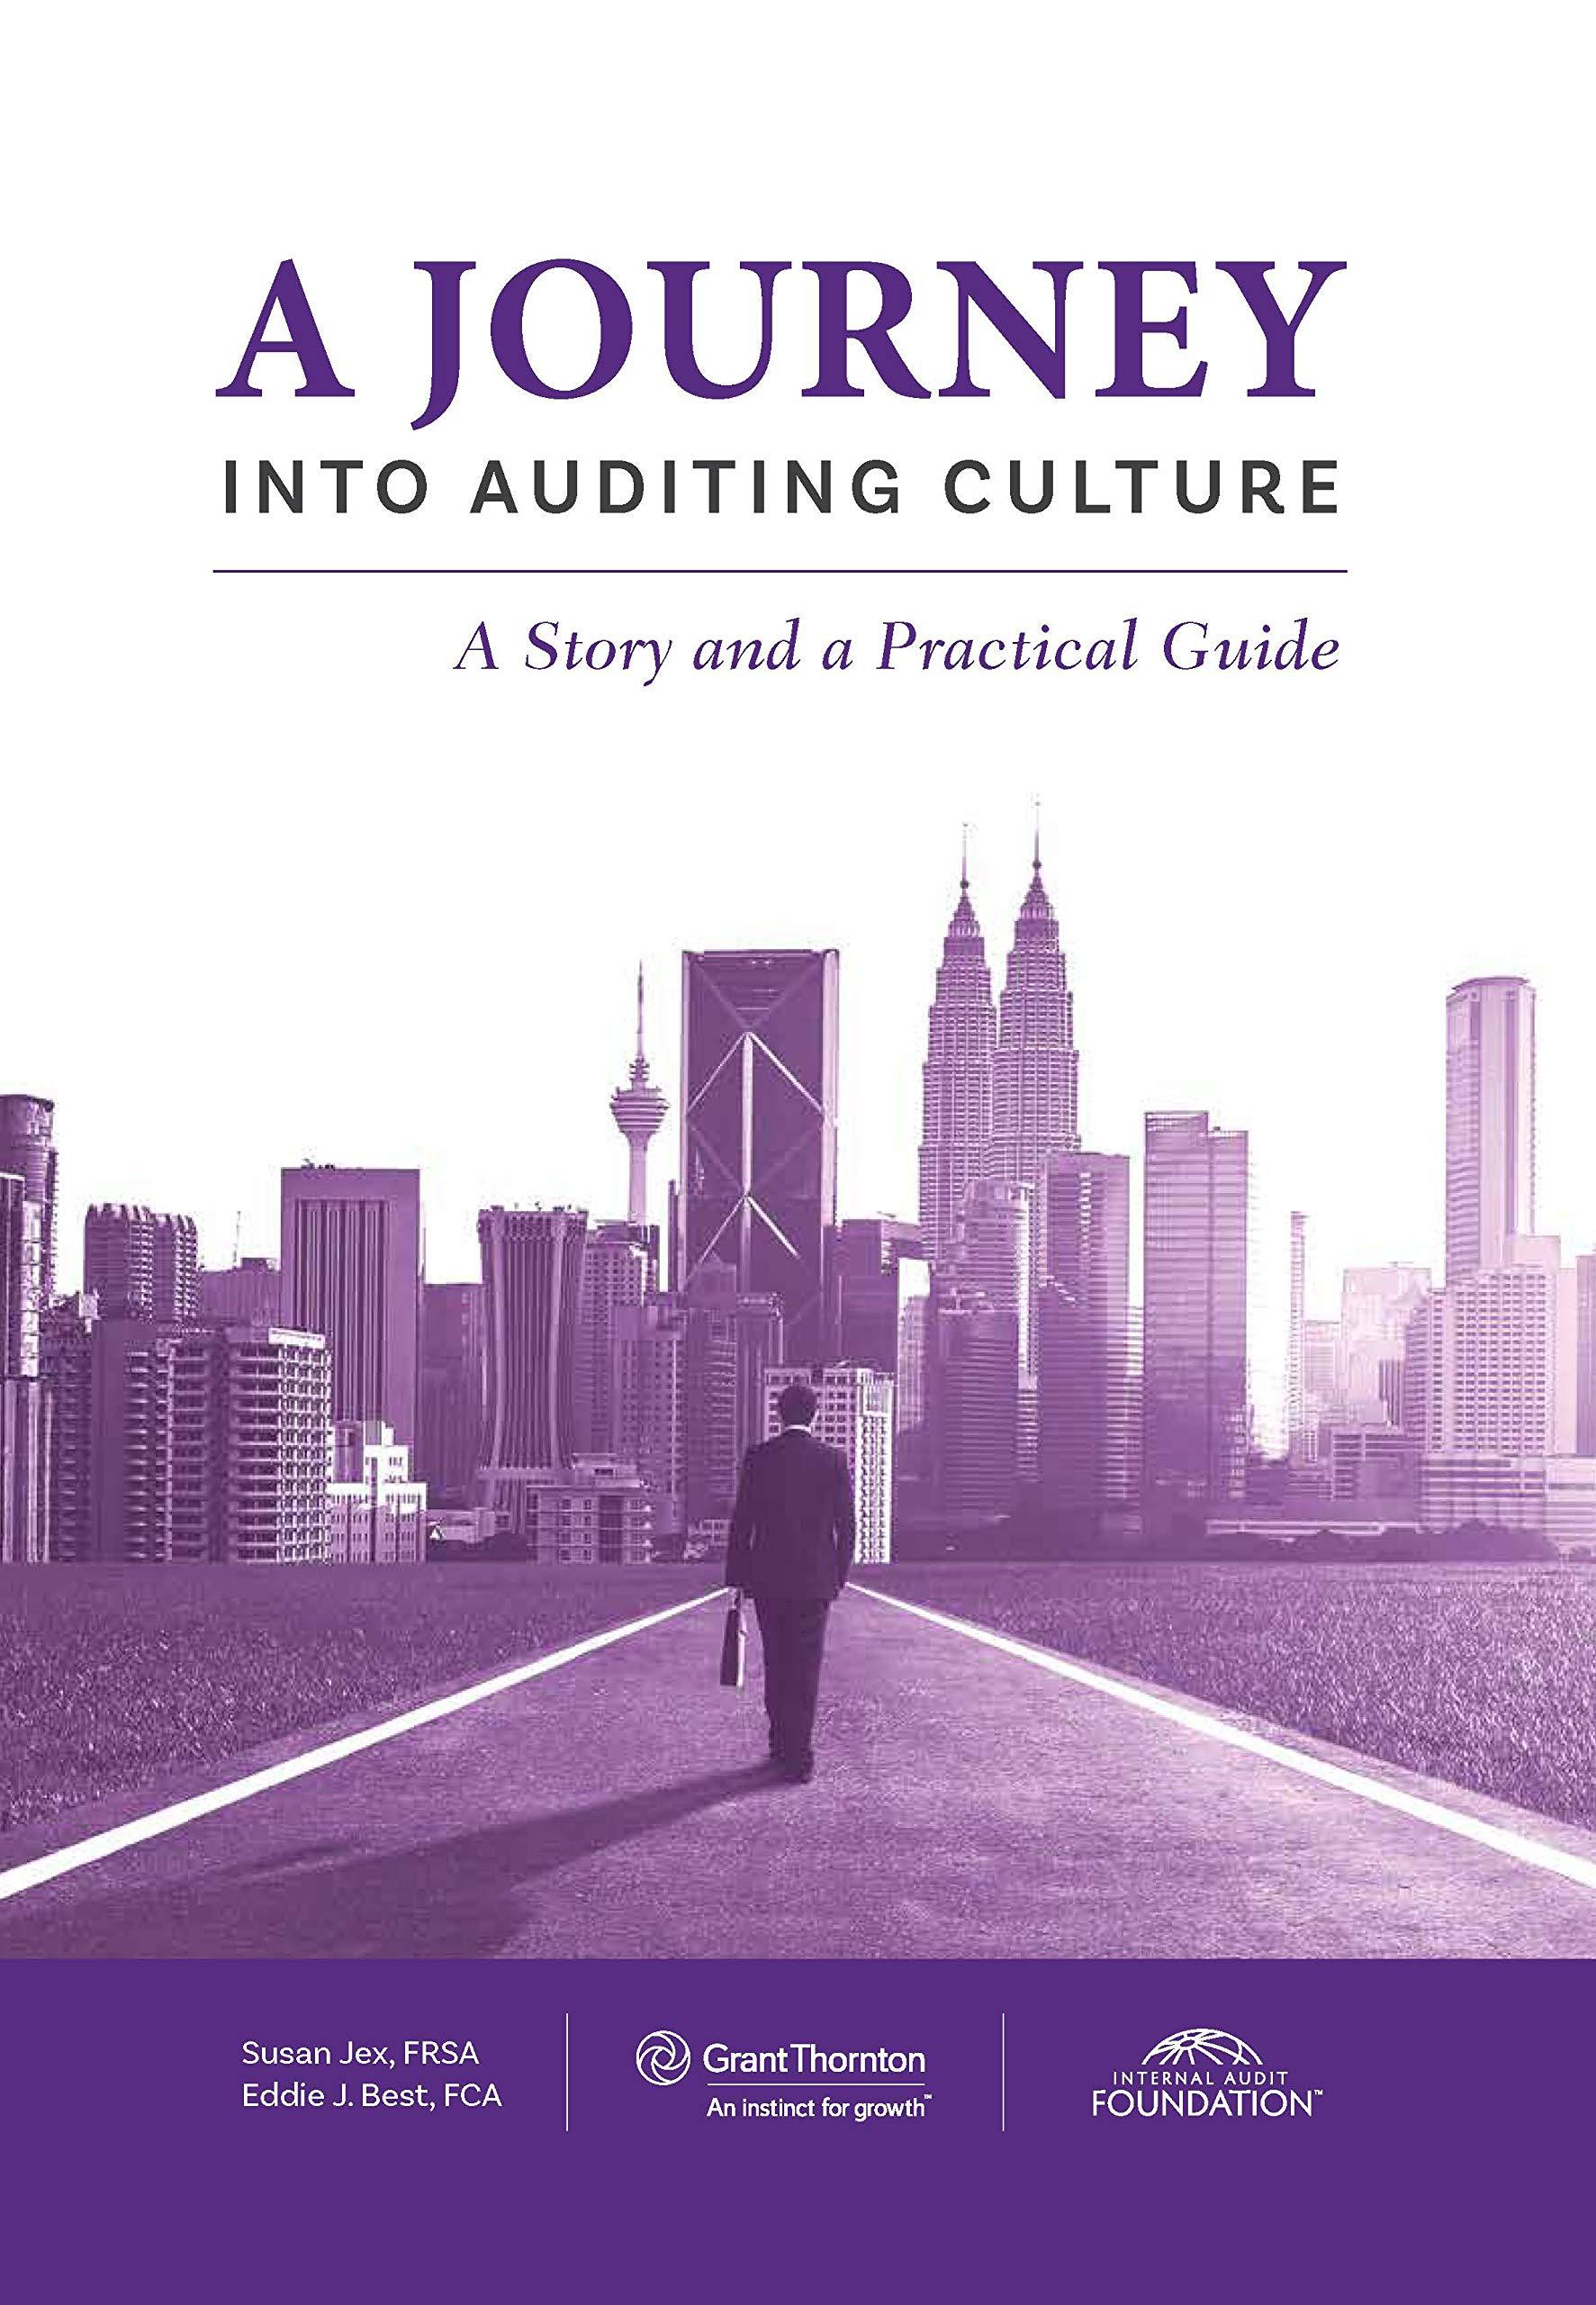 a journey into auditing culture 1st edition grant thornton united kingdom, susan jex, eddie j. best